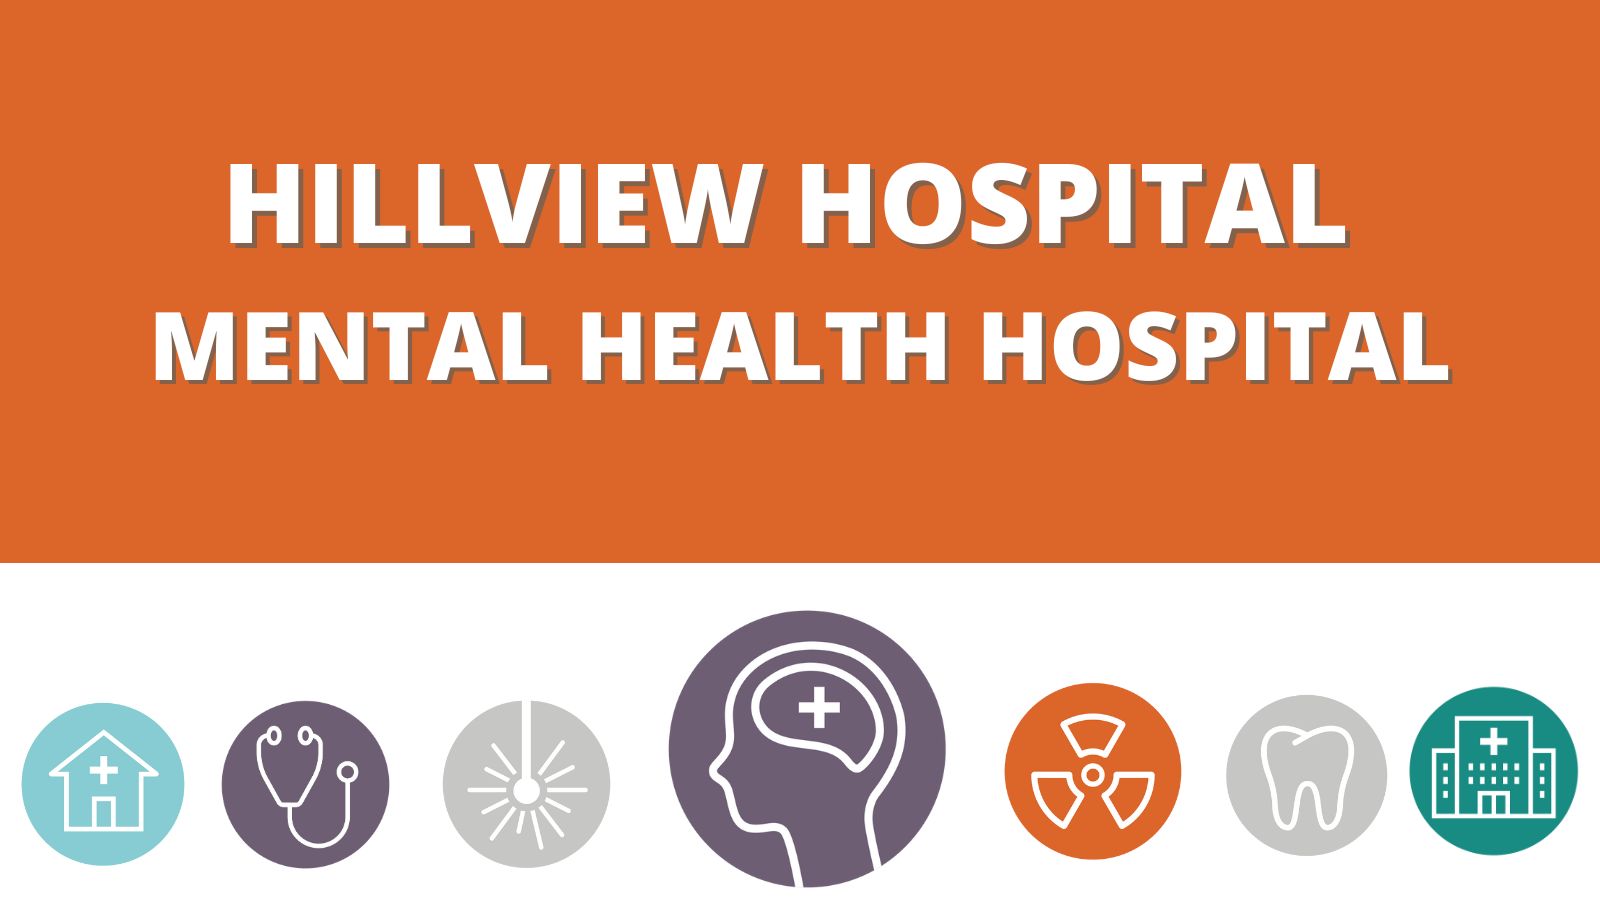 Hillview Hospital Mental Health Hospital